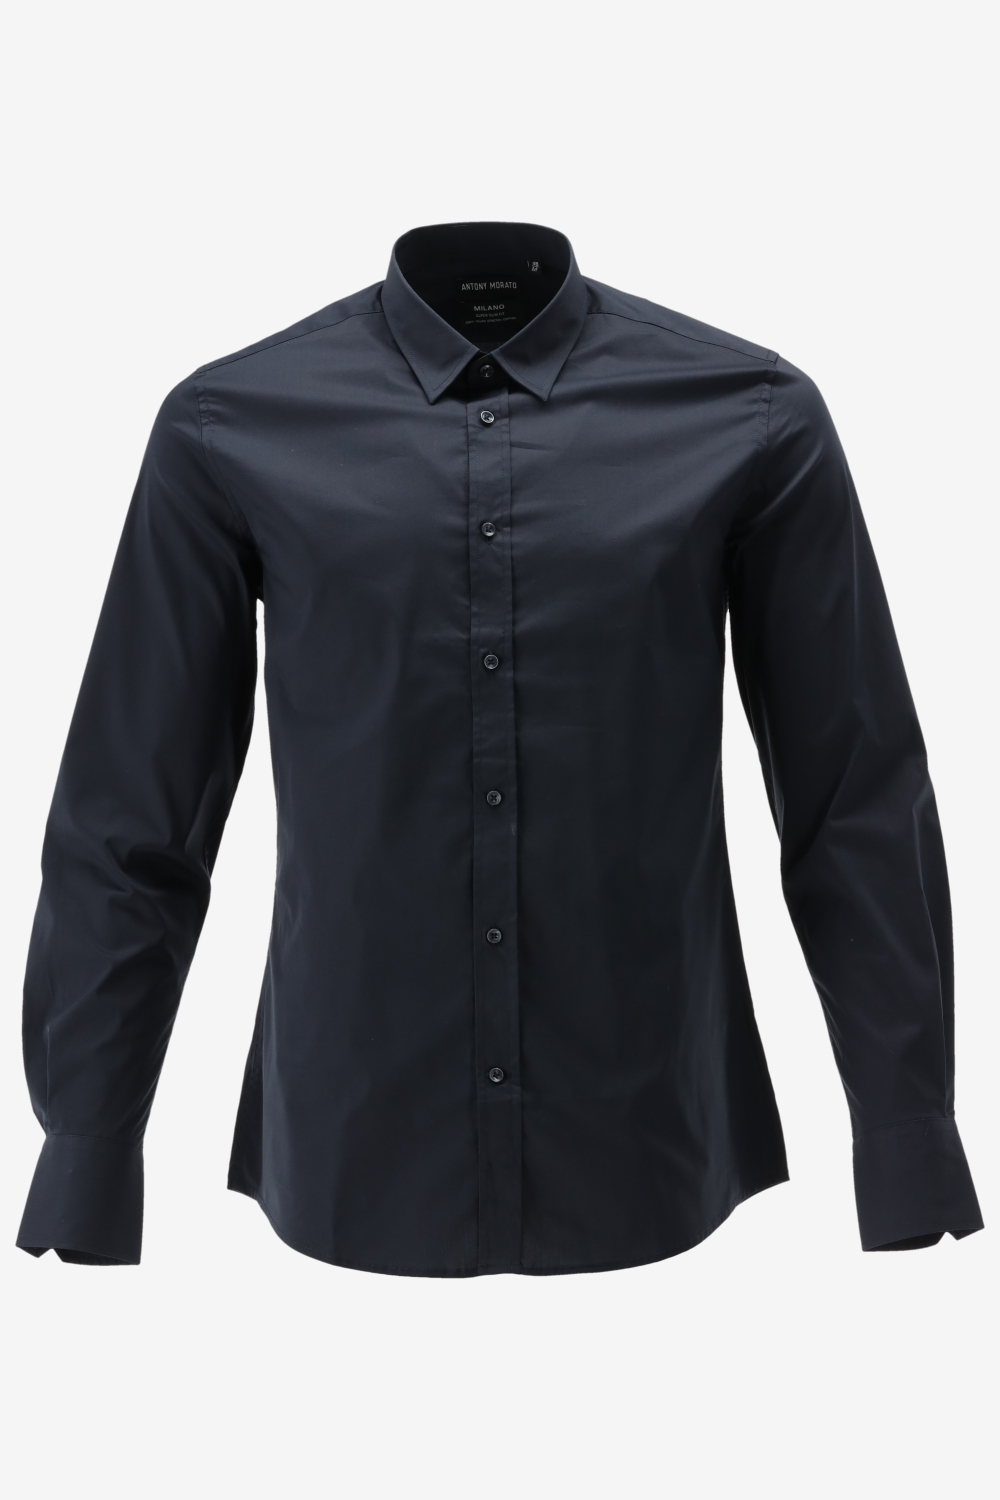 Antony Morato Overhemd Shirt Milano Mmsl00694 Fa450010 7073 Blue Ink Mannen Maat - 46